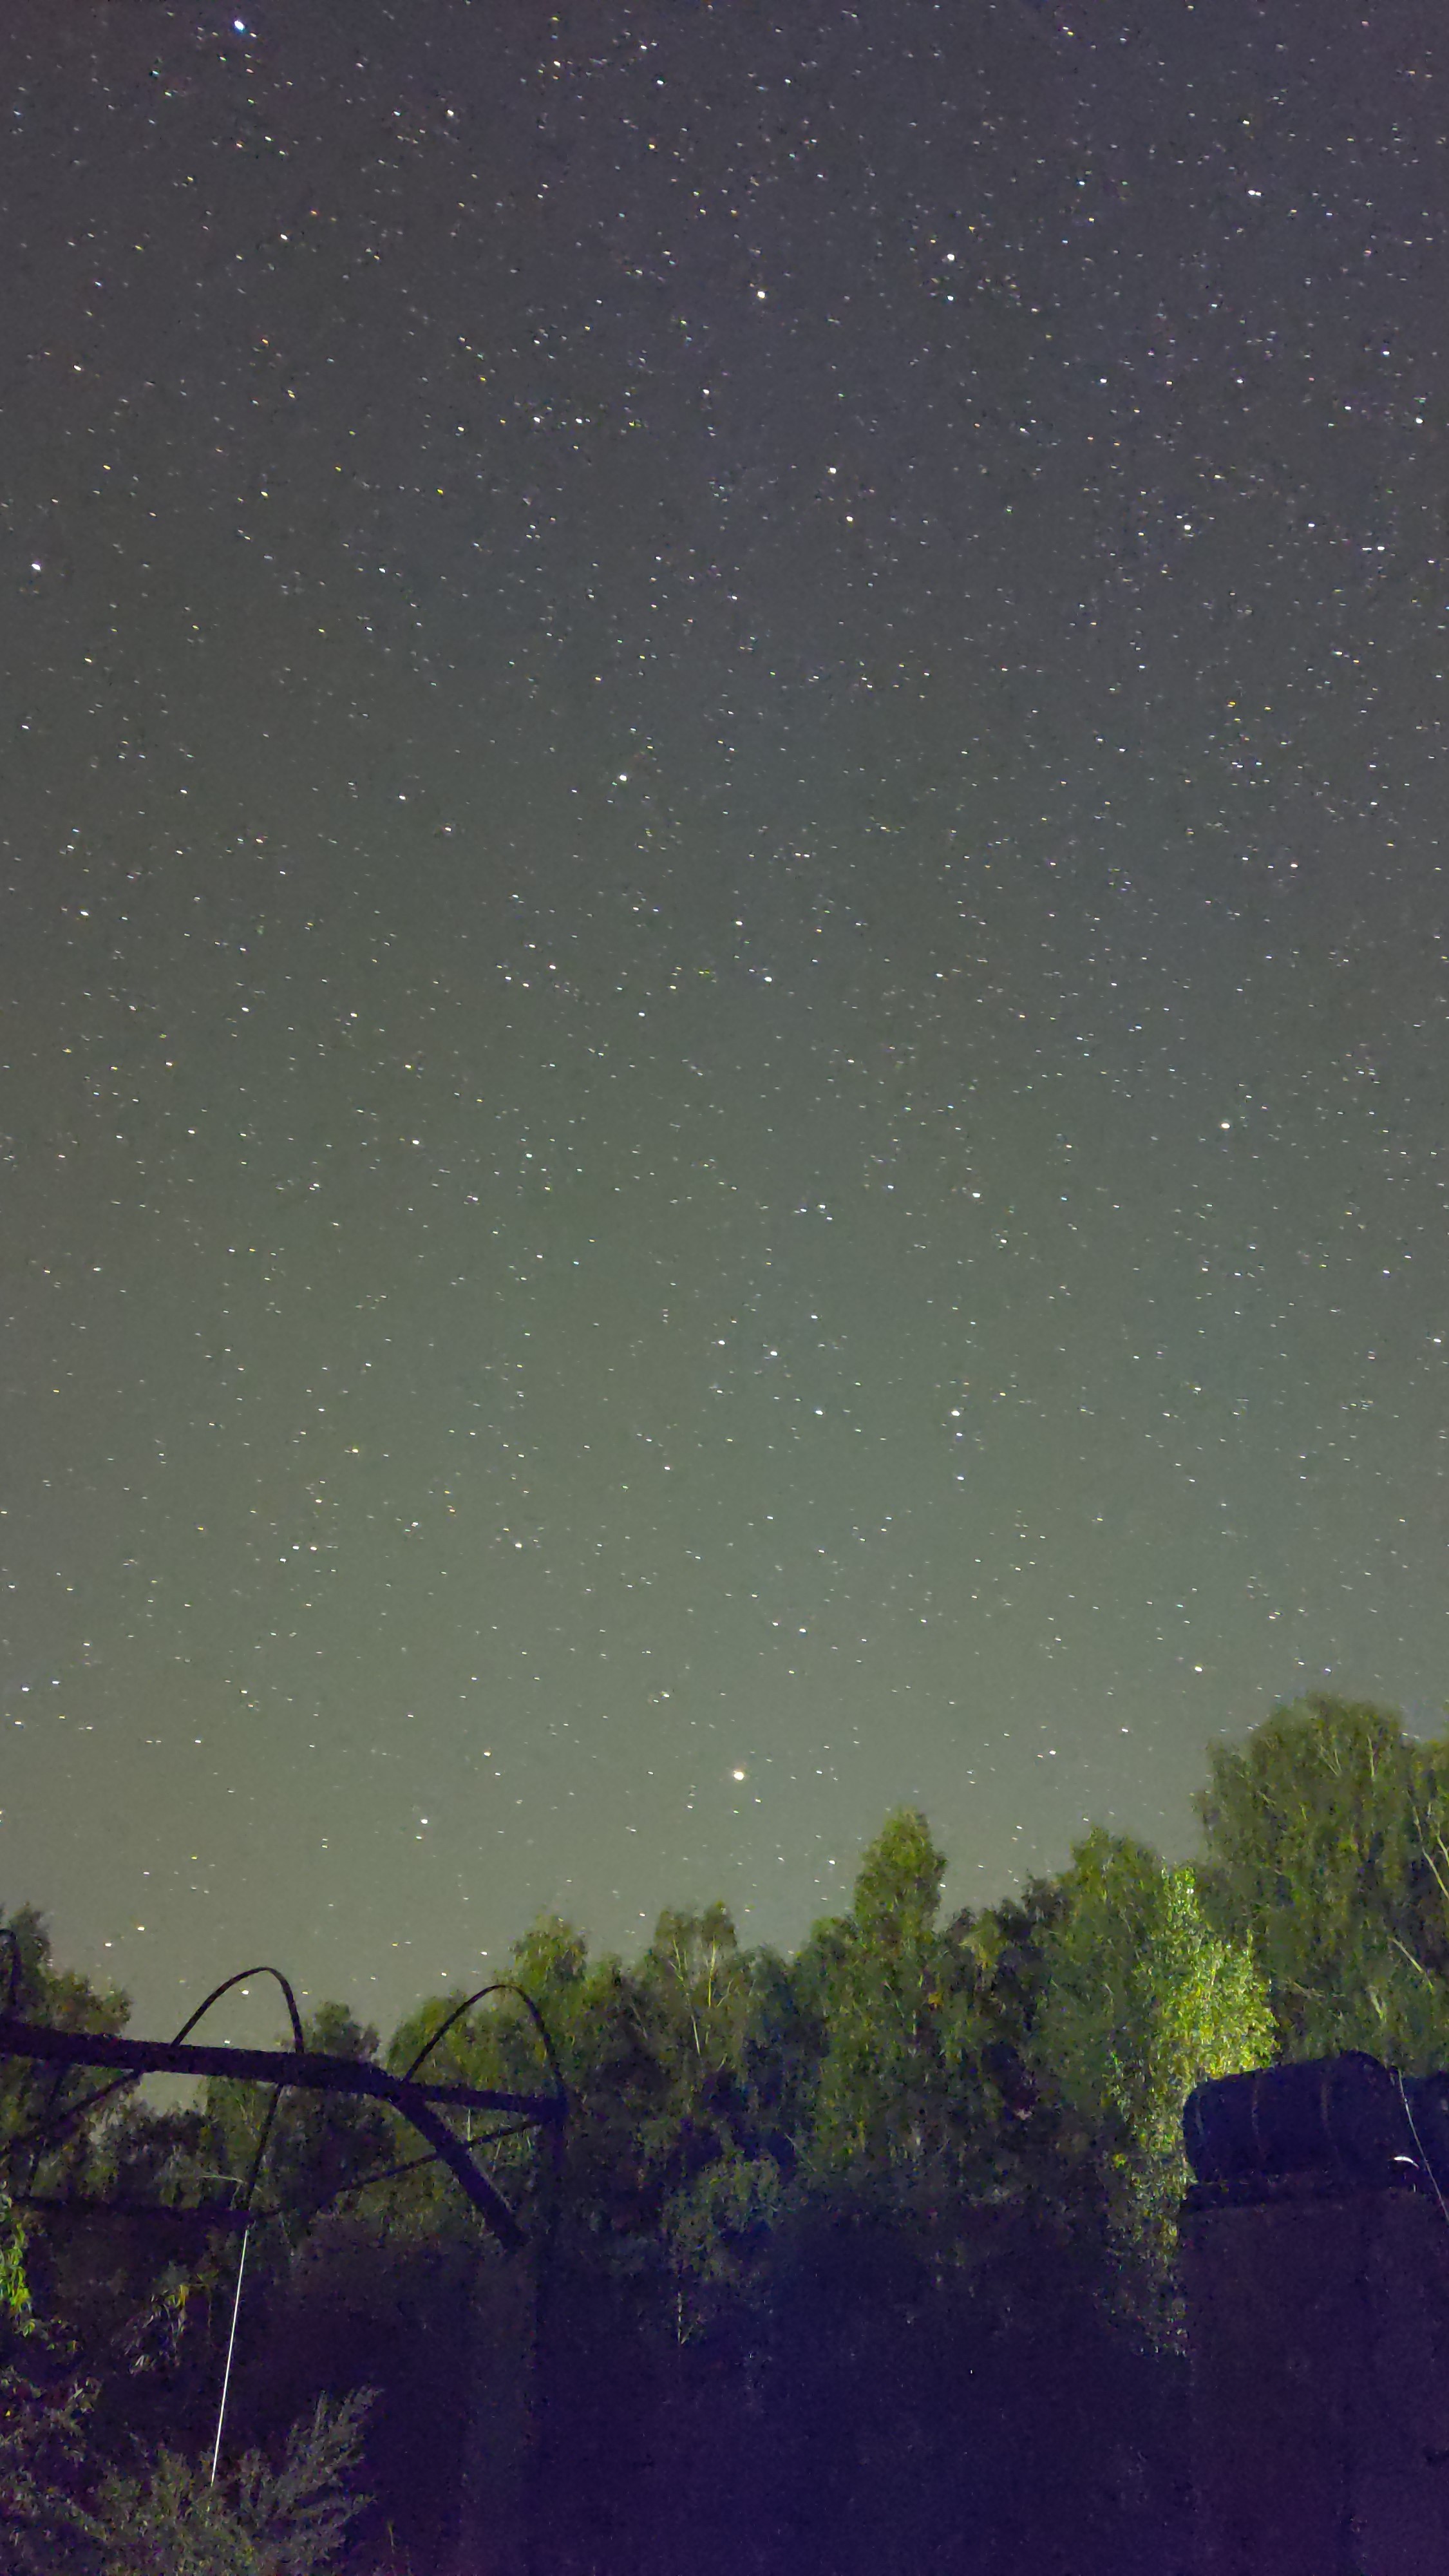 galaxy-sky-photos-with-smartphone-10-southwest-stars.jpg